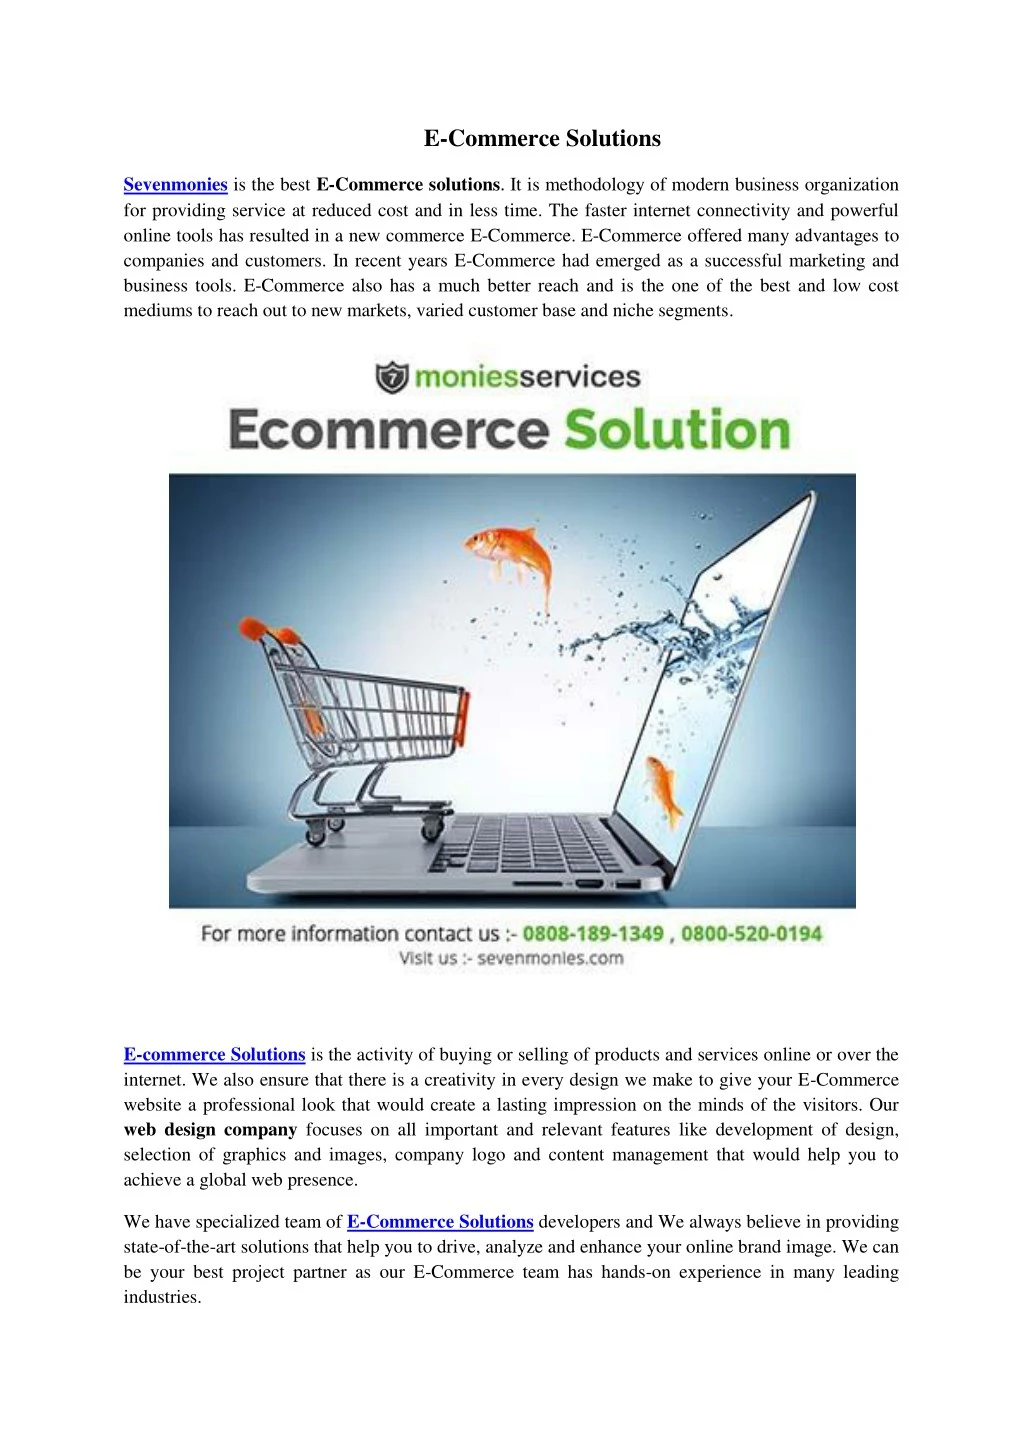 e commerce solutions